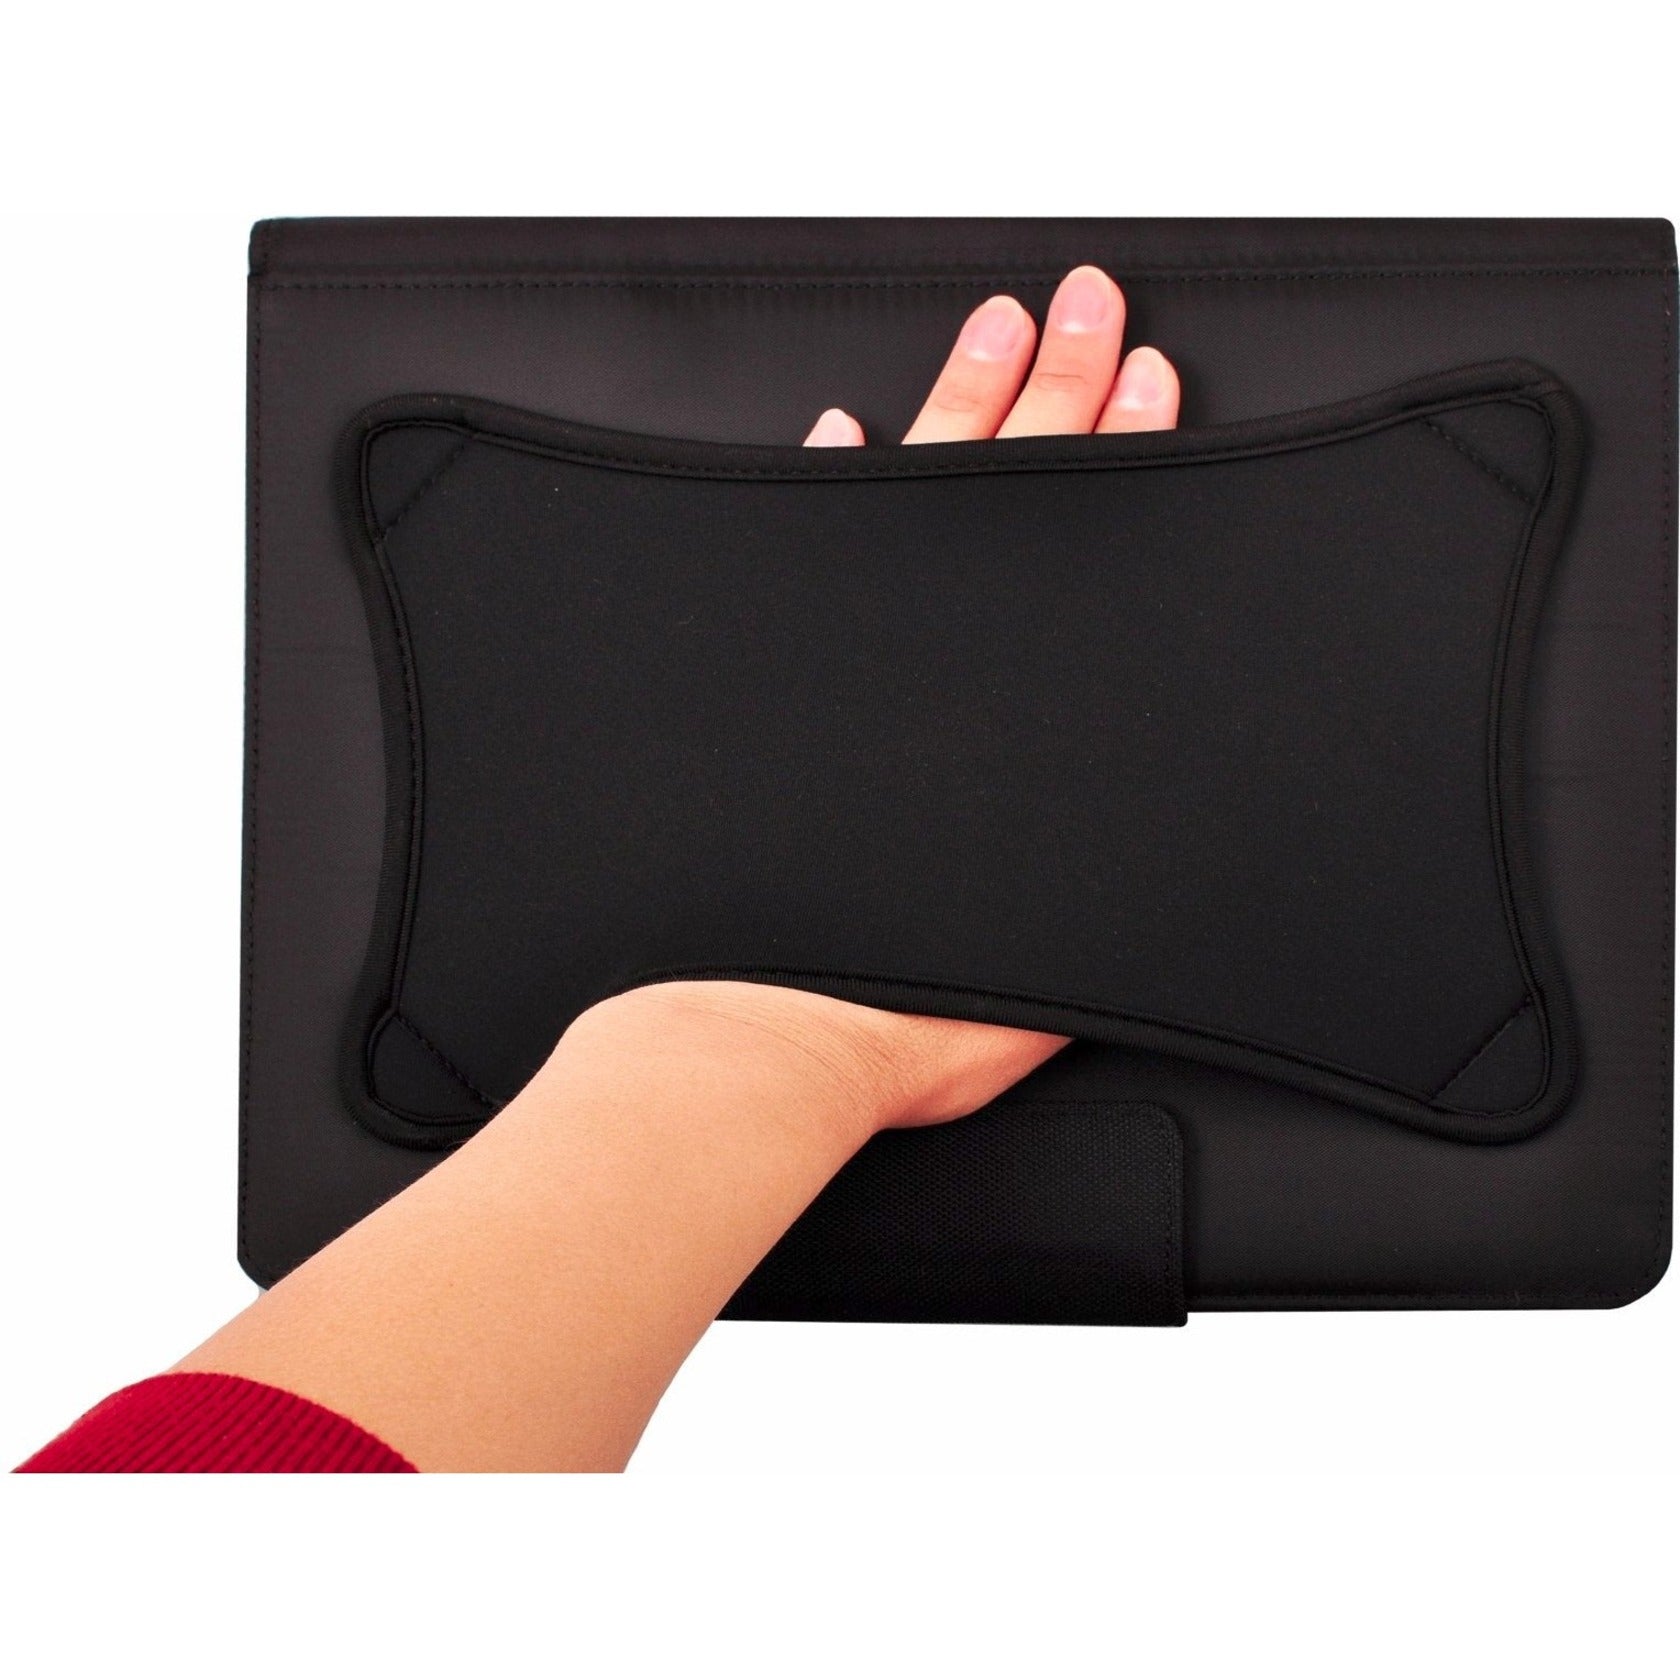 CODi C30702021 Nylon Folio w/ Mitt for iPad Pro 12.9 (Gen 5), Carrying Case for Tablet, Business Card, Stylus, Pen